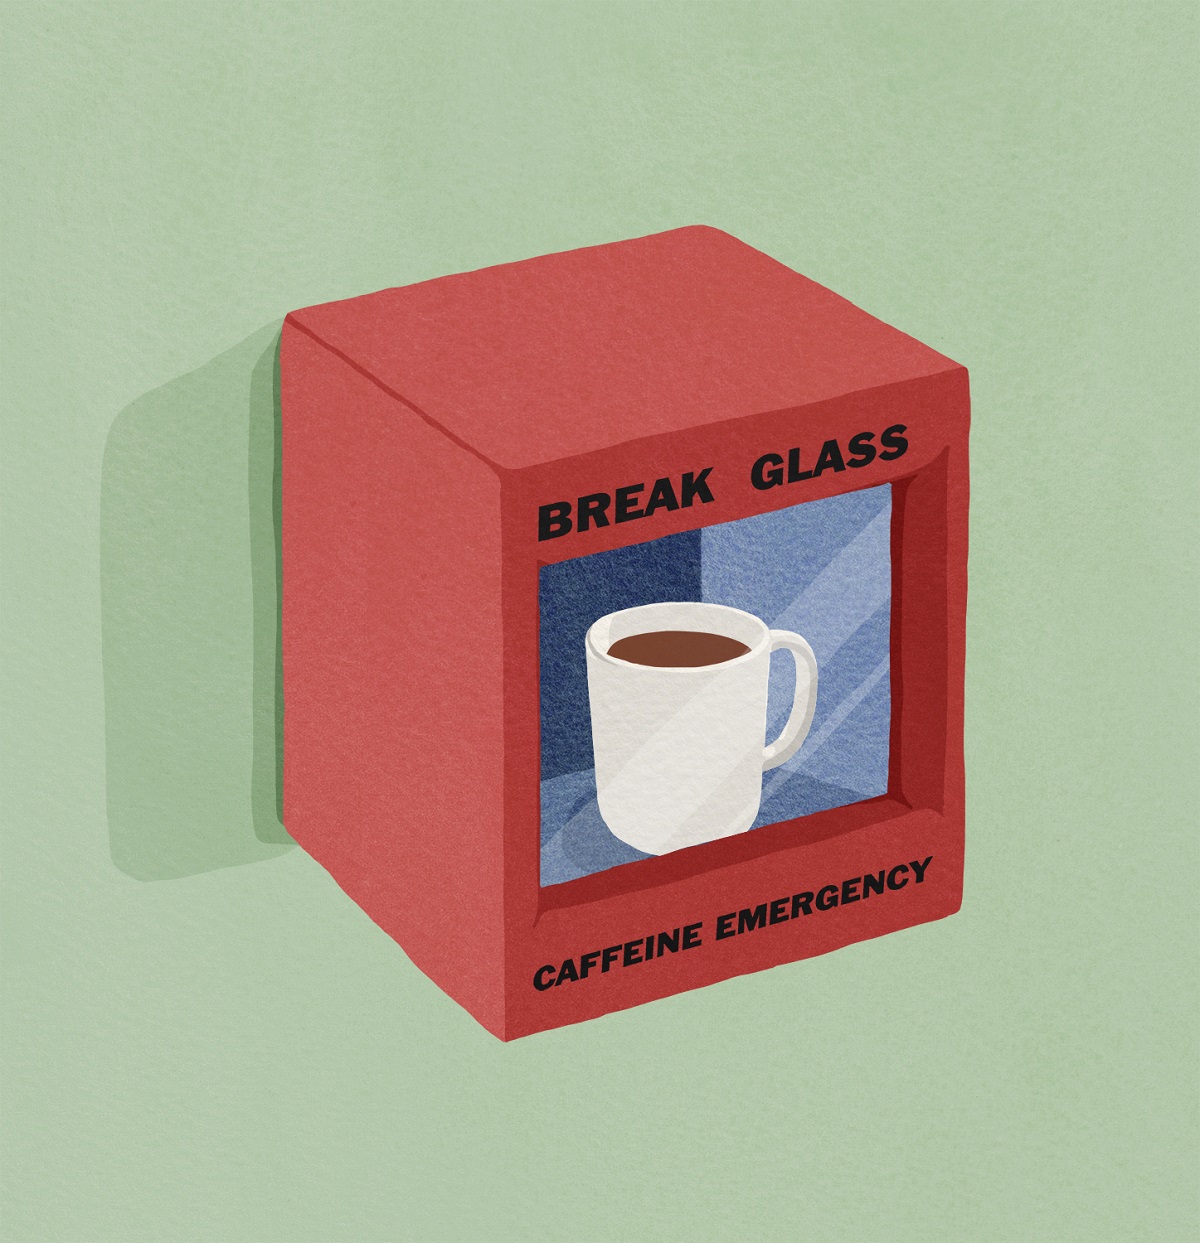 Caffeine Emergency